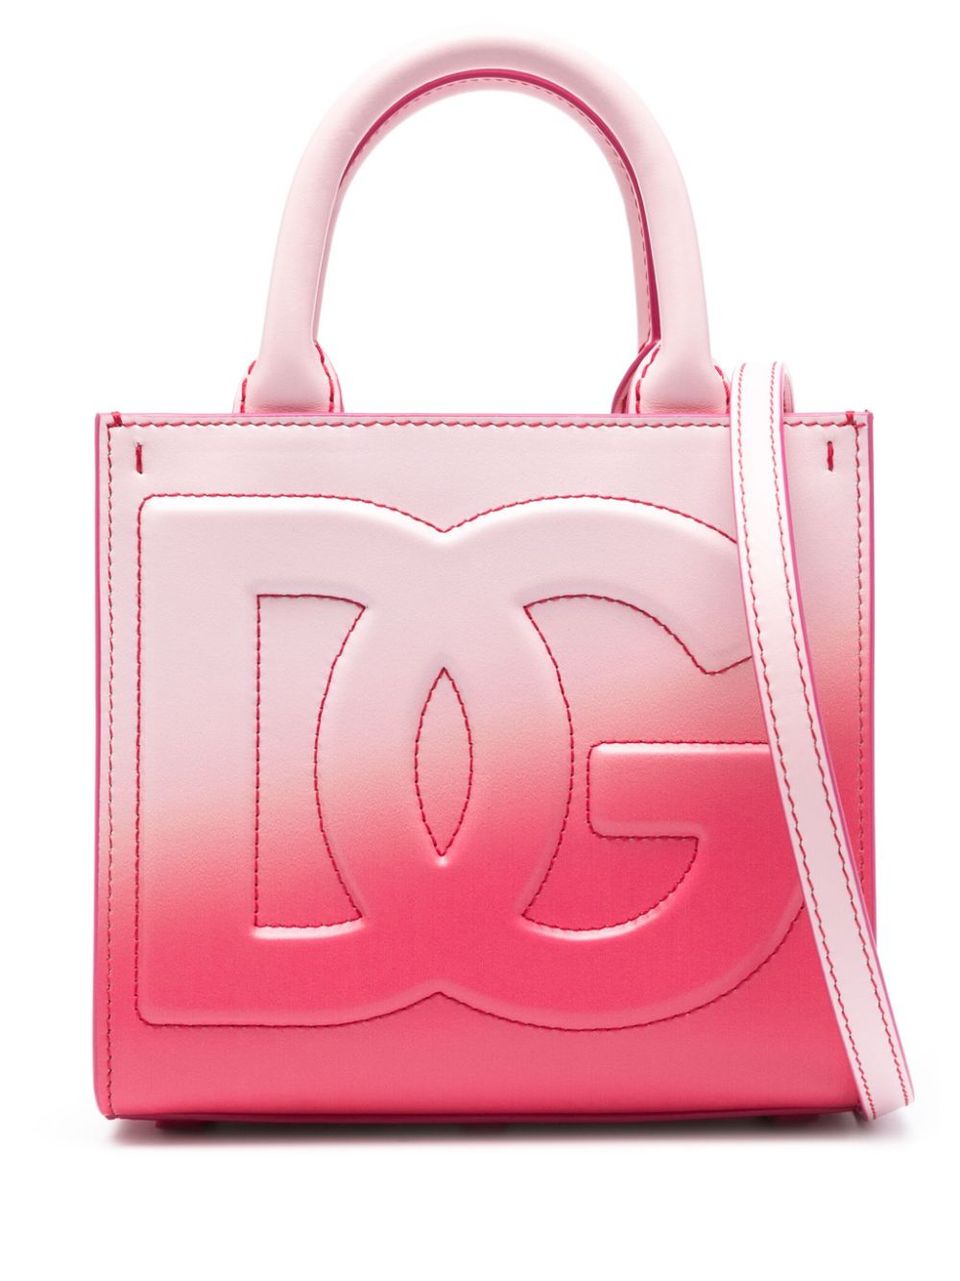 DG logo bag